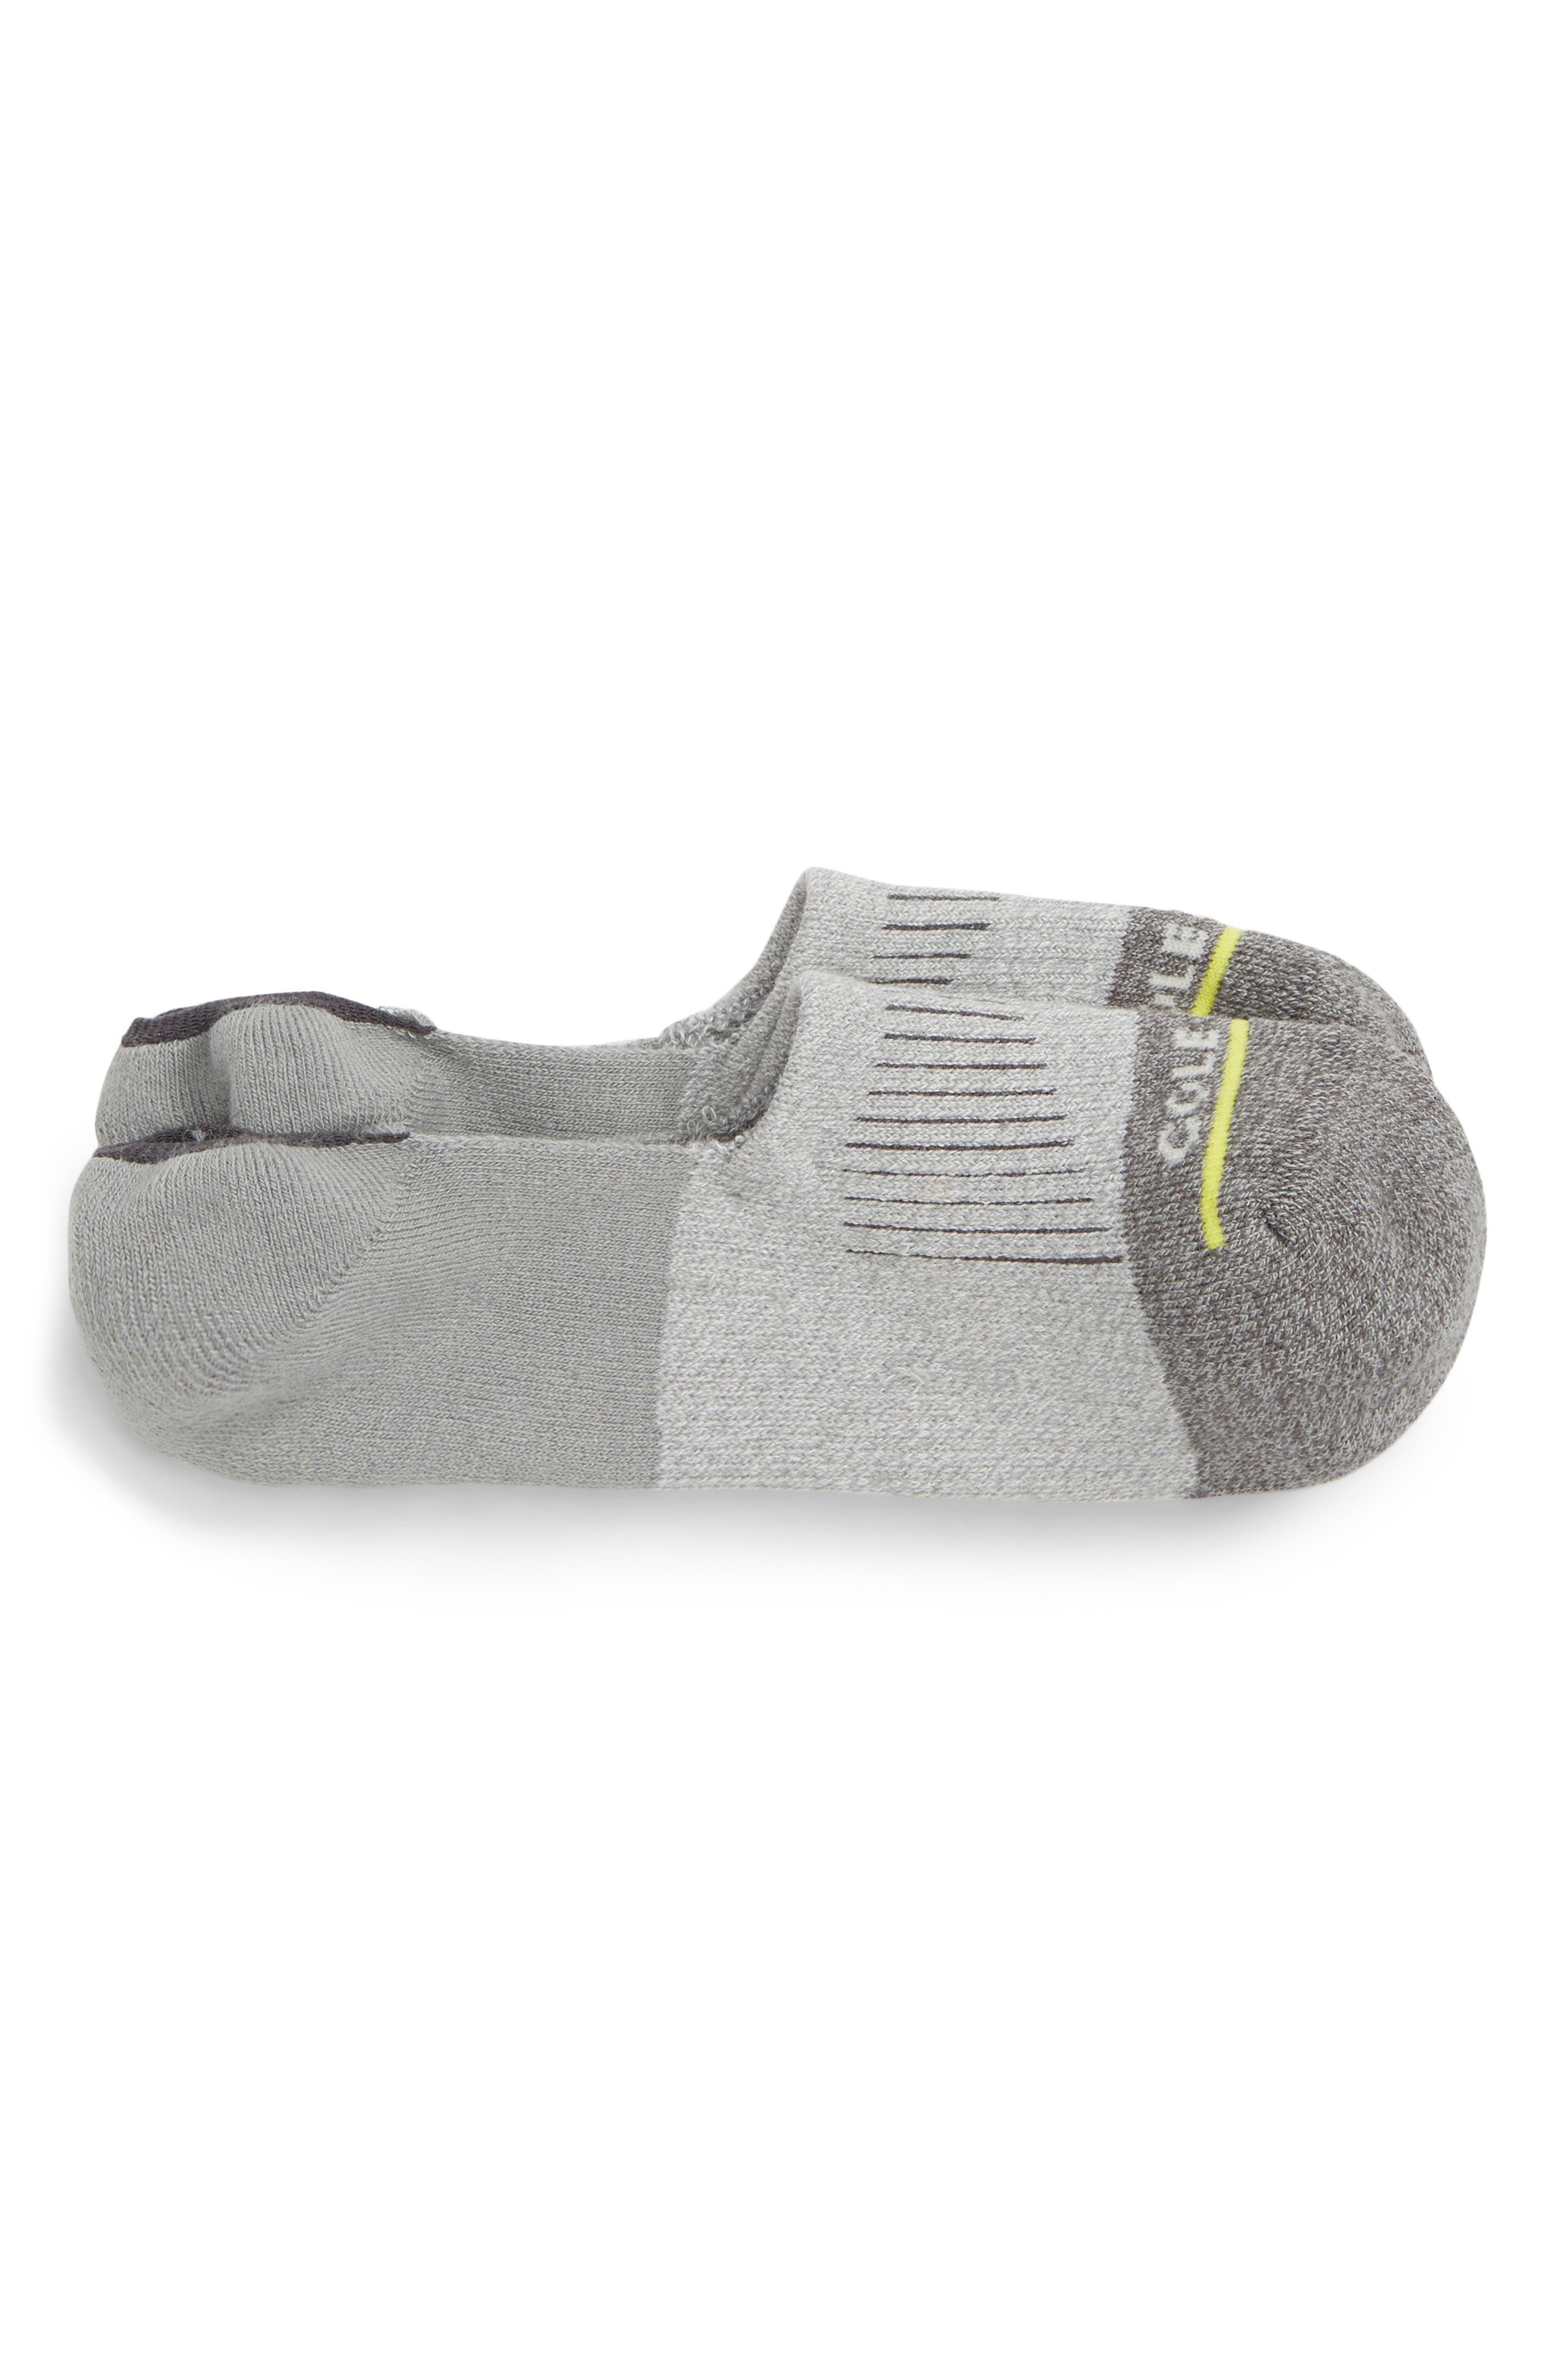 zerogrand socks